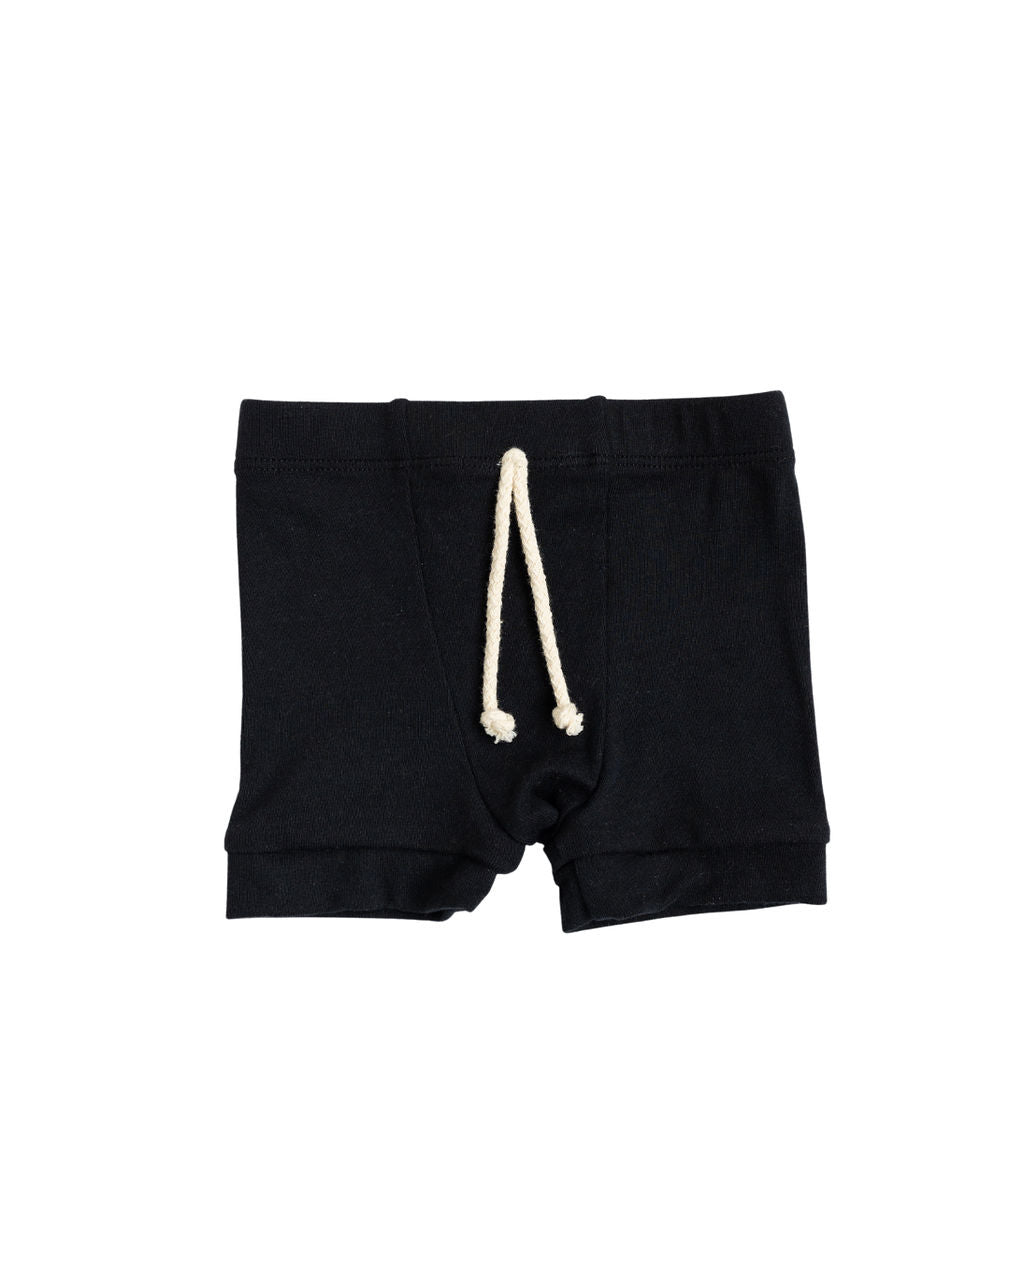 rib knit shorts - black 1x1